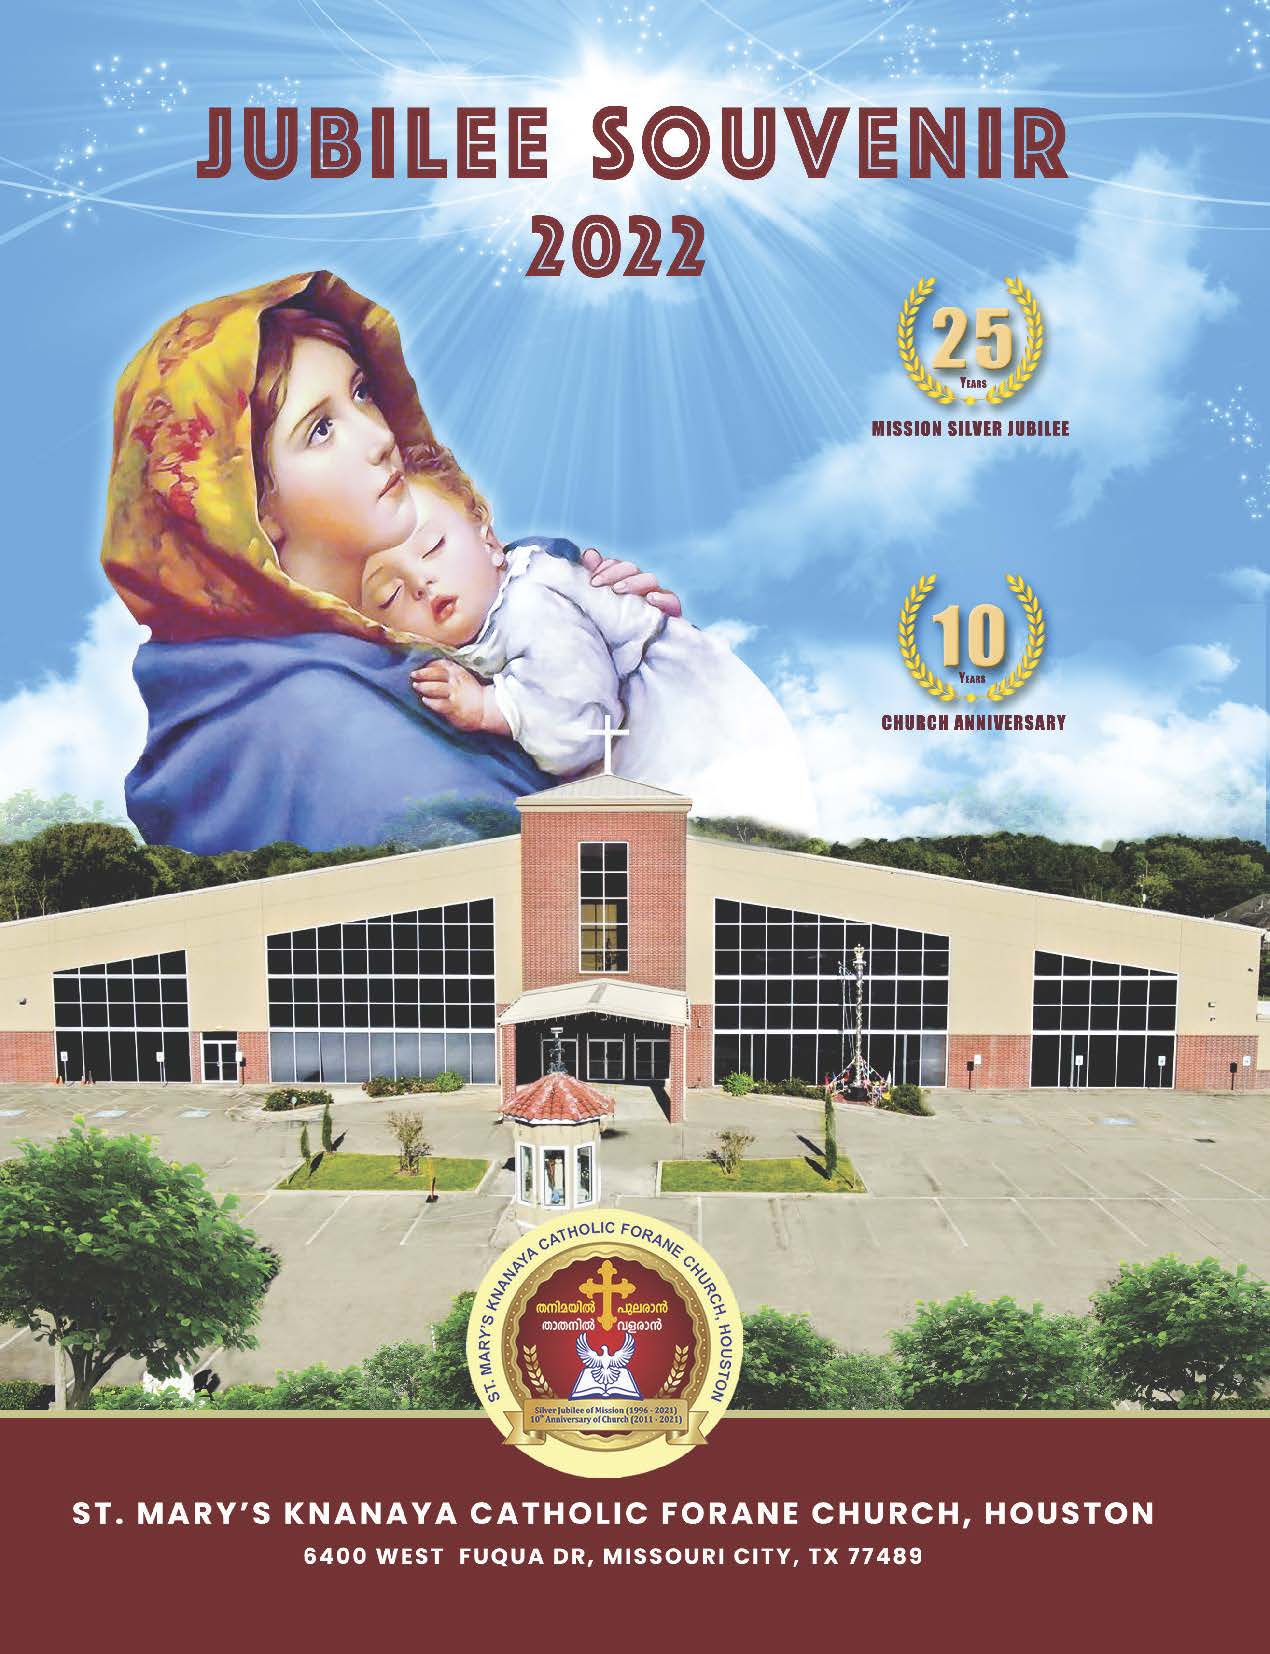 Jubilee Souvenir 2022 of Houston Knanaya Catholic Parish